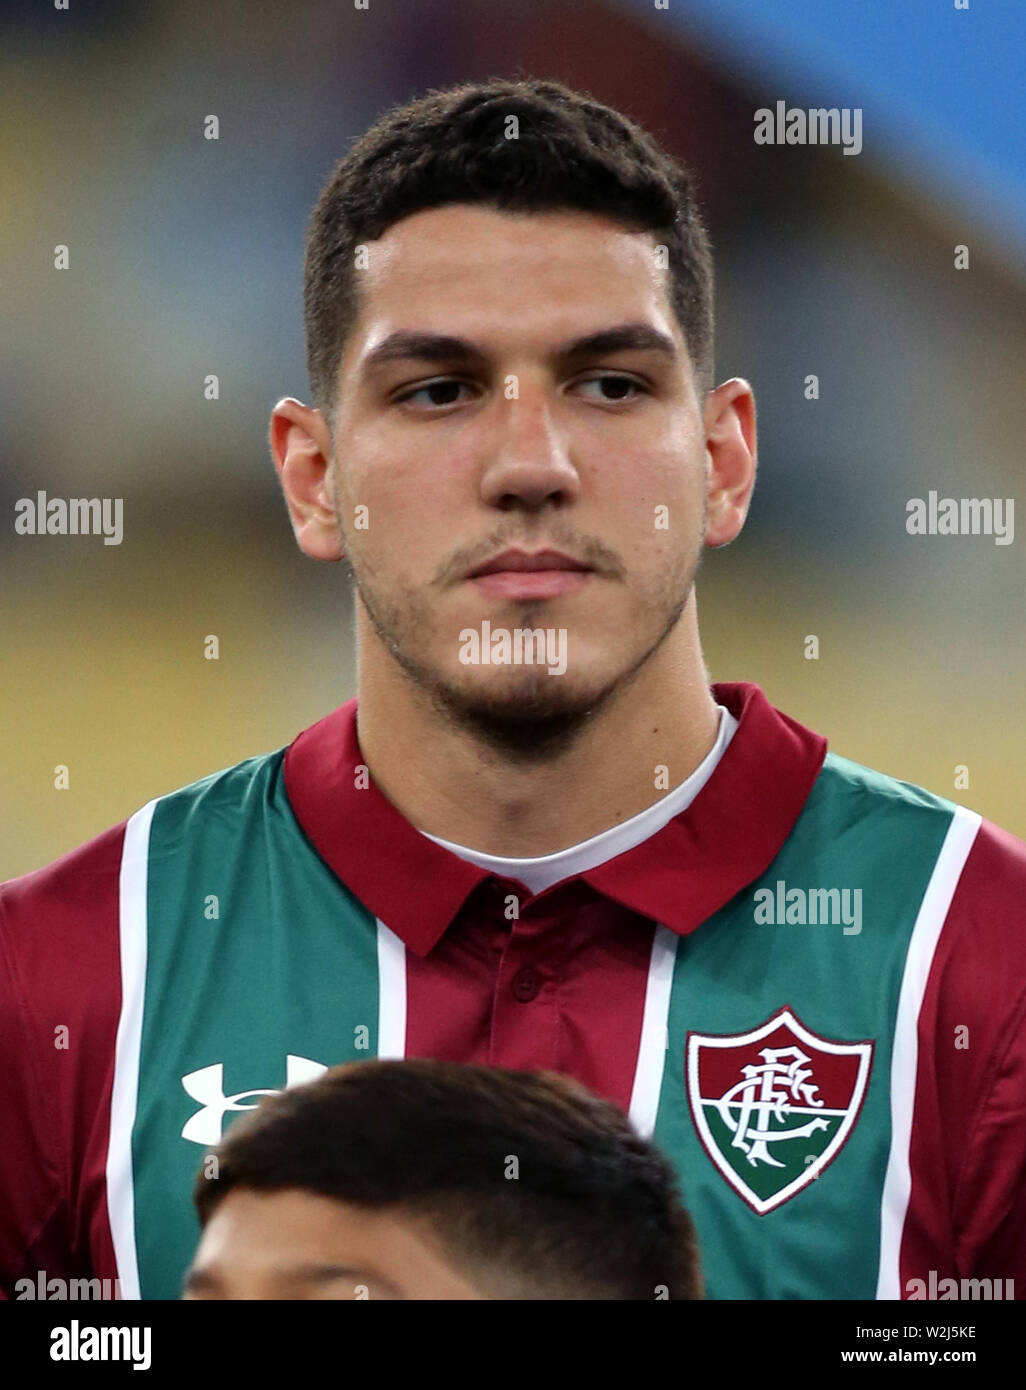 Brazilian Football League Serie A / ( Santos Futebol Clube ) - Vladimir  Orlando Cardoso de Araujo Filho  Vladimir Stock Photo - Alamy